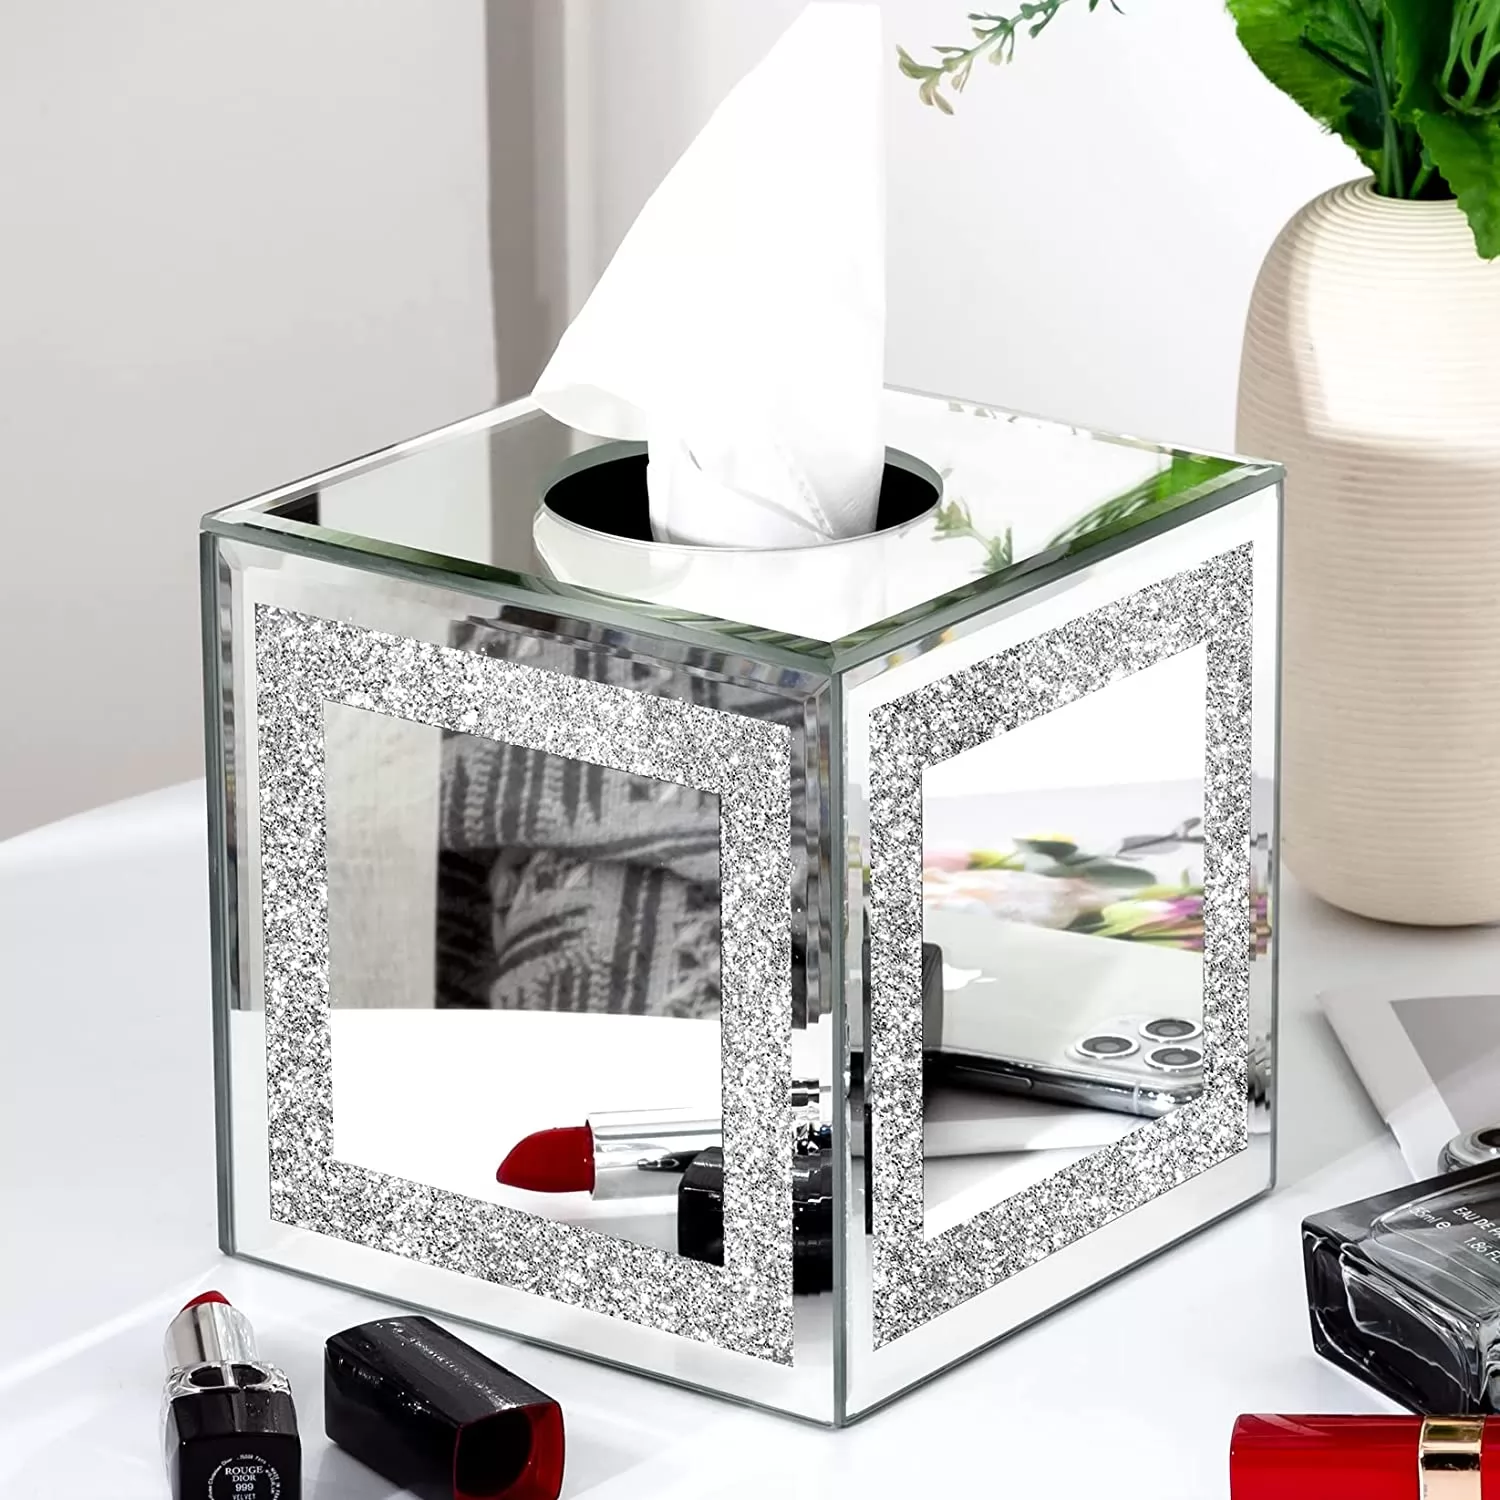 SHYFOY Square Mirror Tissue Box Holder, Glitter Decorative Glass Tissue Box Cover with Magnetic Closure, Silver Mirrored Tissue Box Holders Paper Case